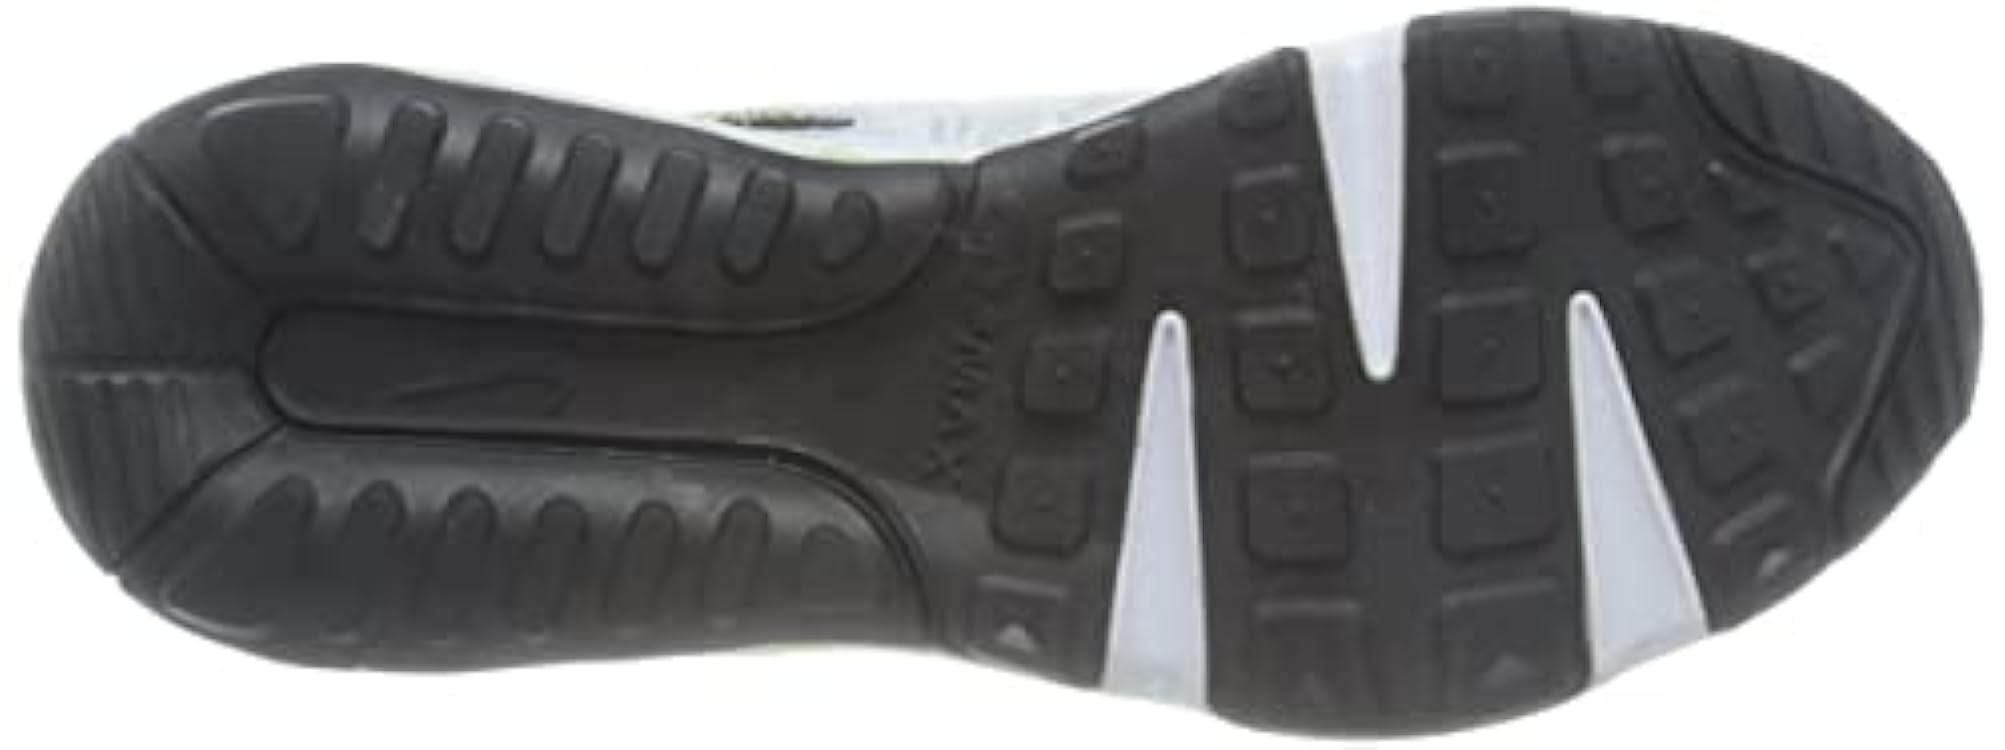 Nike Air Max 2090 C/S (GS), Sneaker Bambini e Ragazzi 818072773